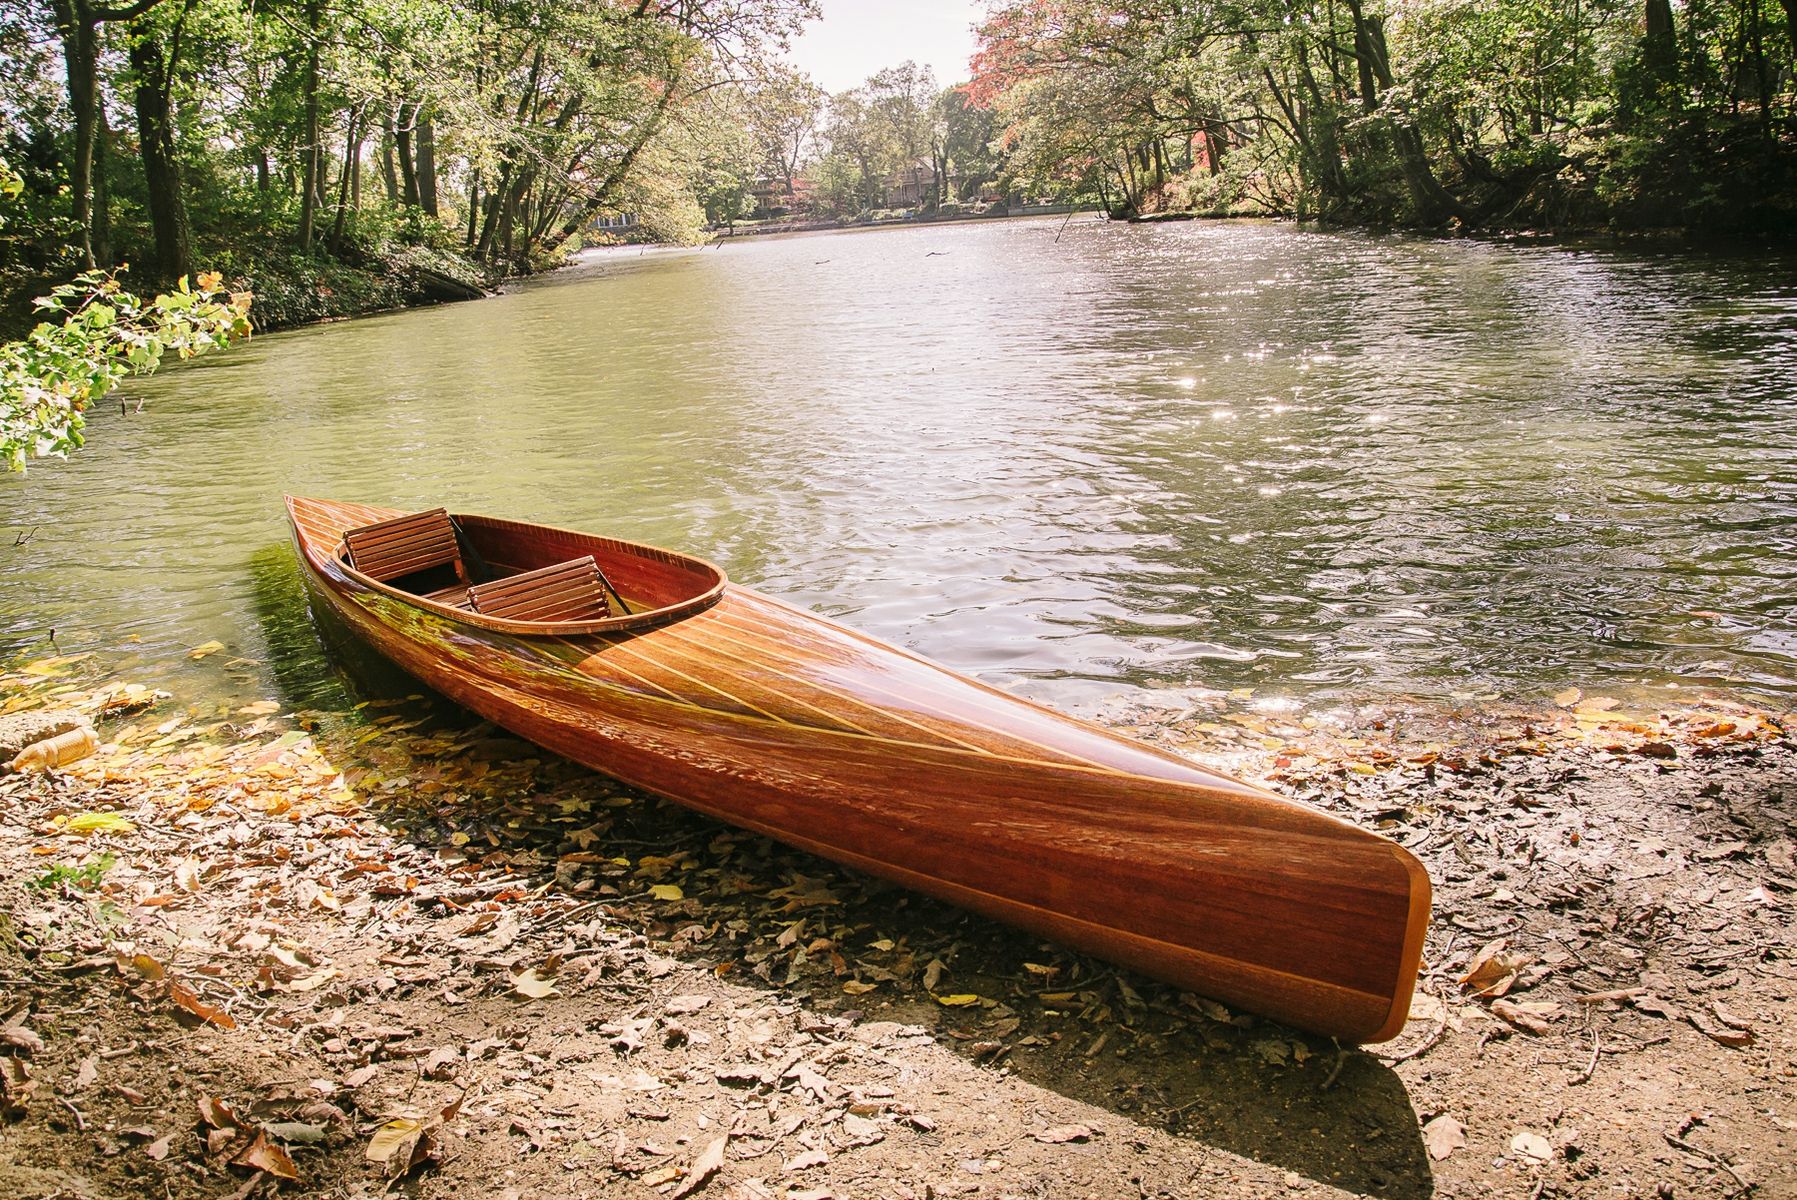 parker man to offer handmade, wooden kayaks for rent